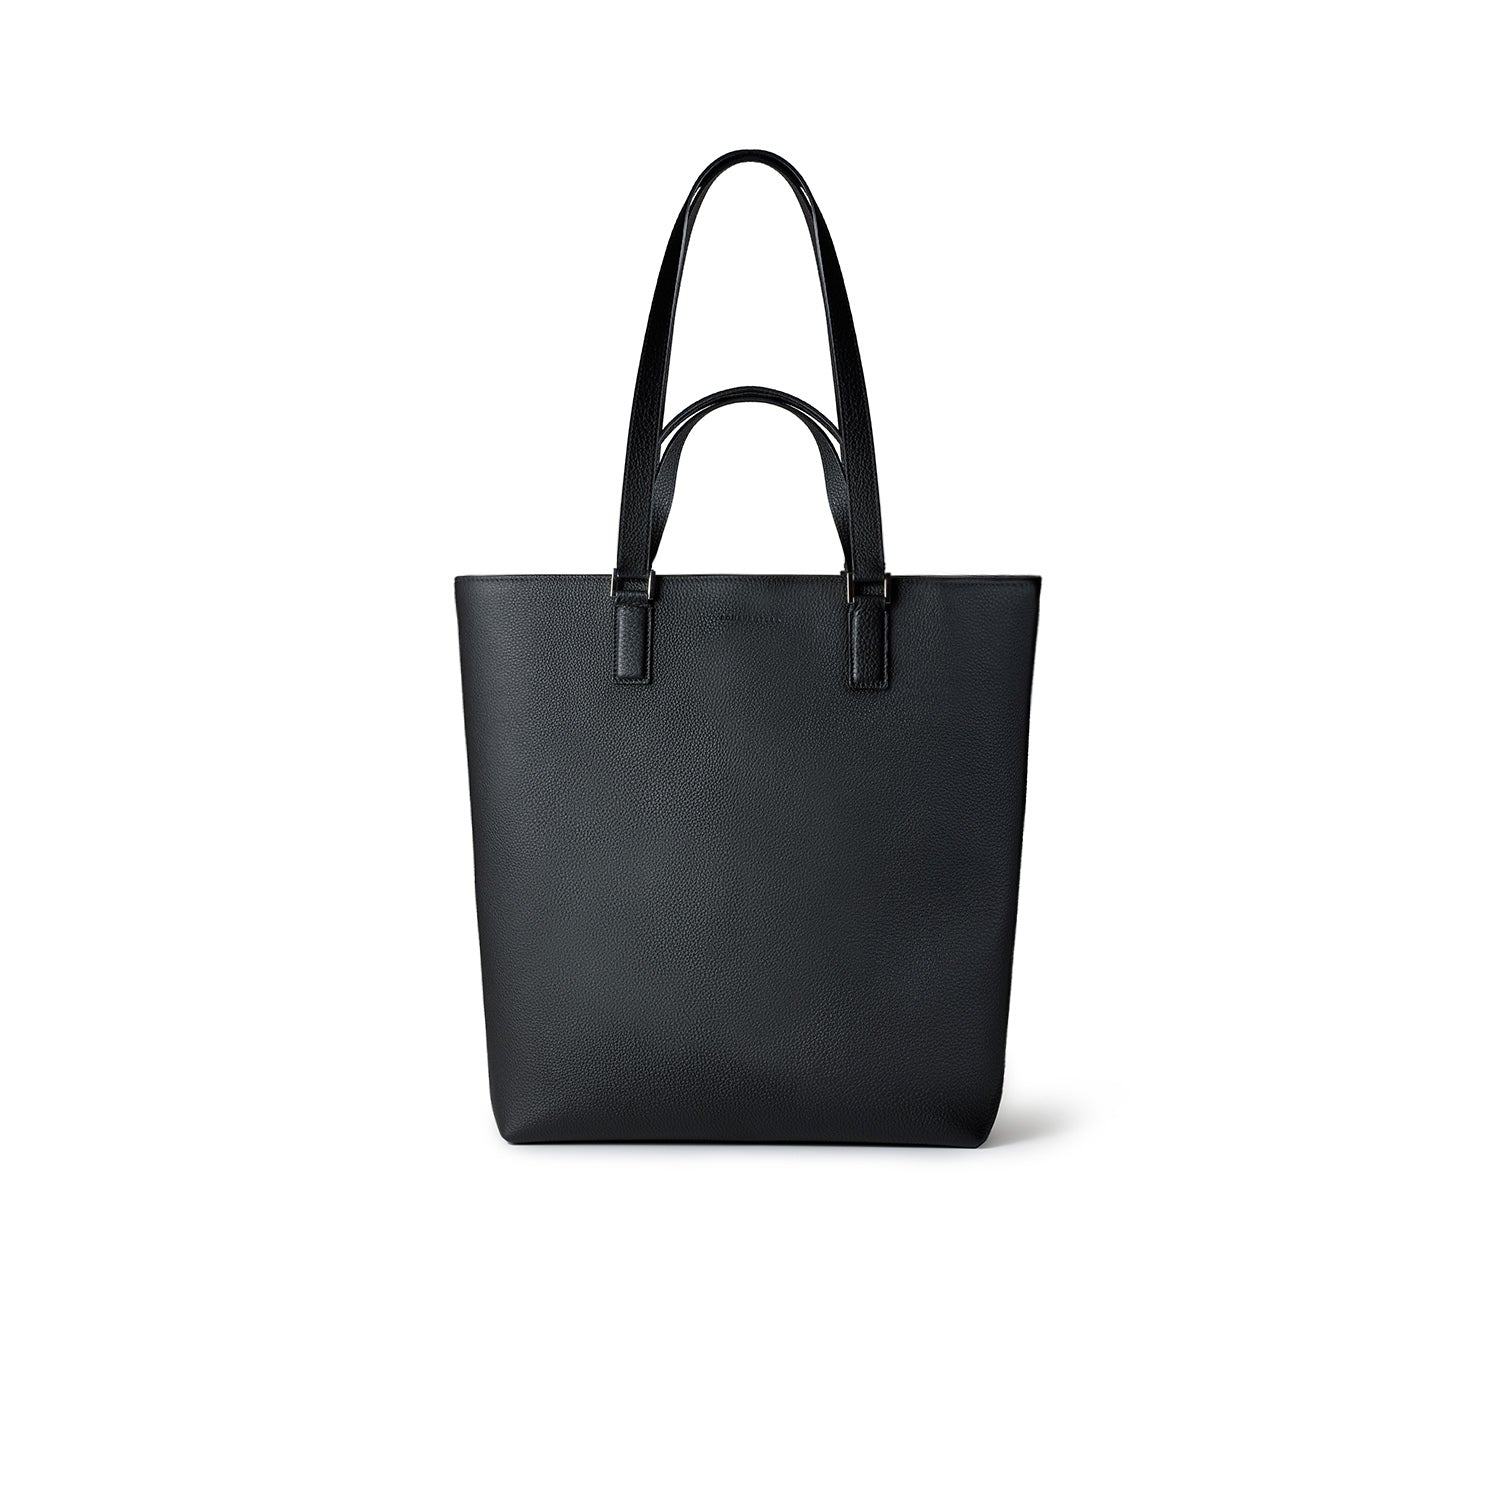 Cleo Tote Bag in Shrink Leather Black